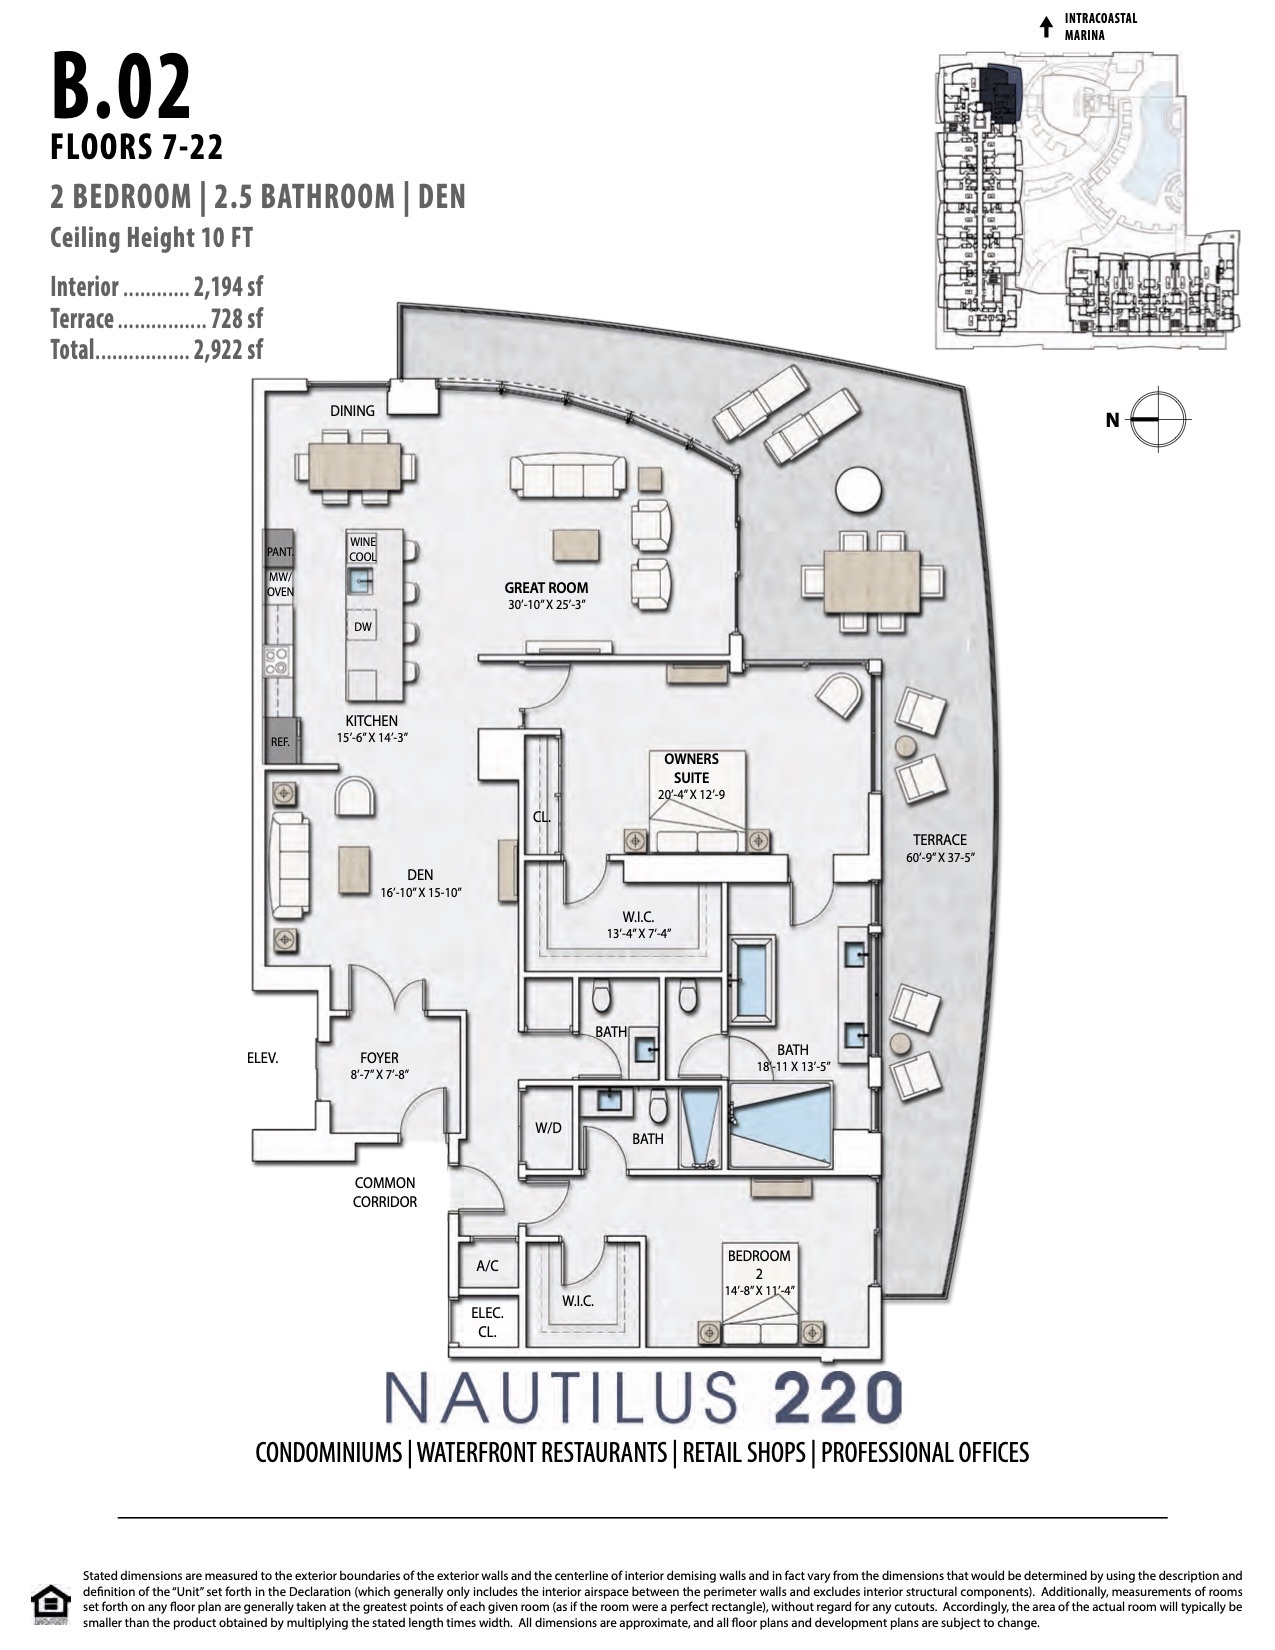 Floor Plan for Nautilus 220 Floorplans, B.02